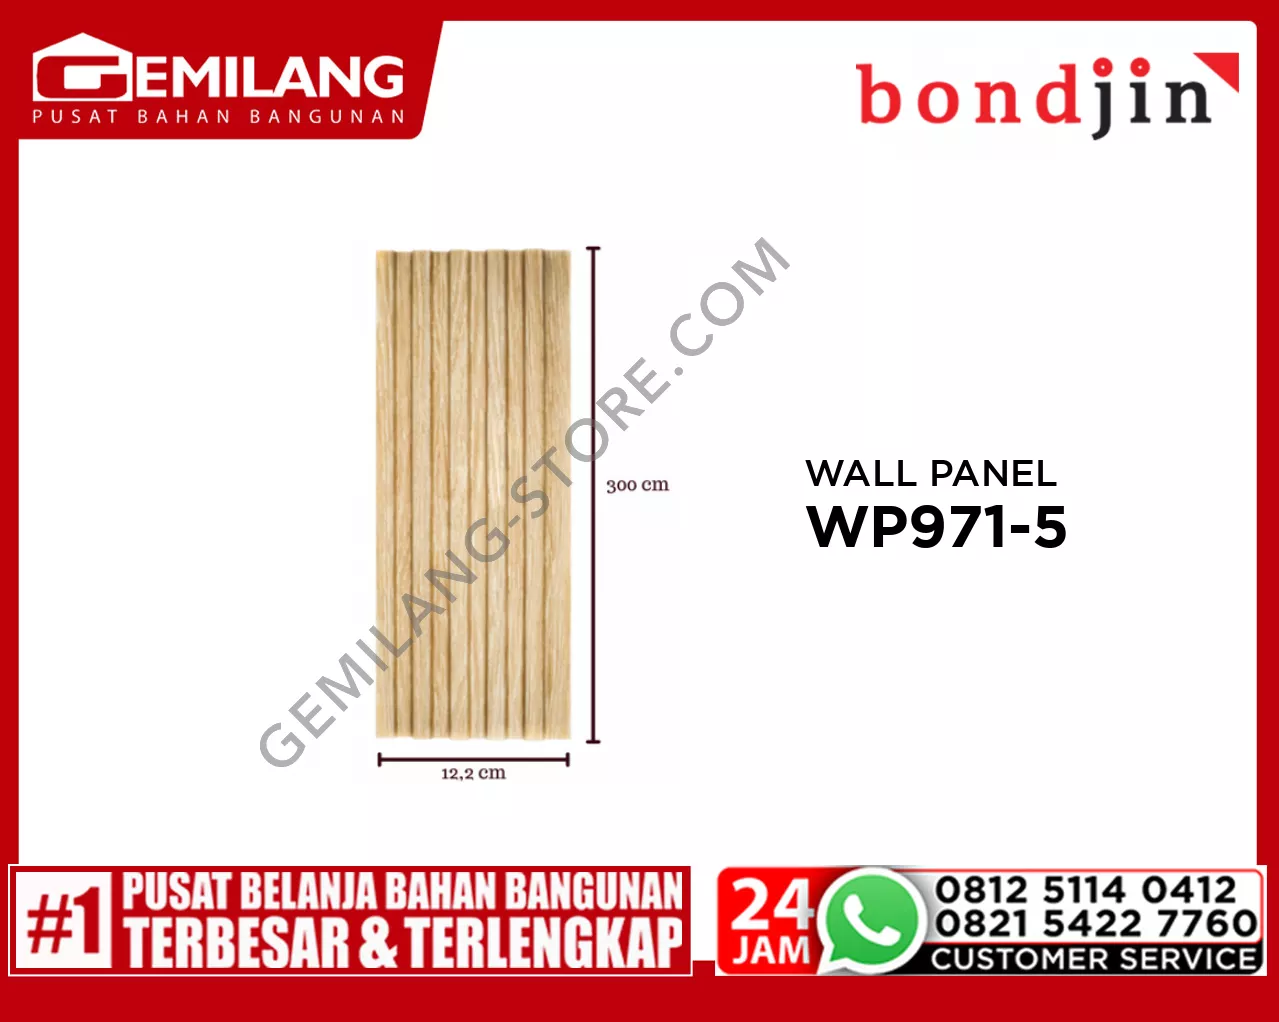 BONDJIN WALL PANEL WP971-5 (122 x 3000 x 12)